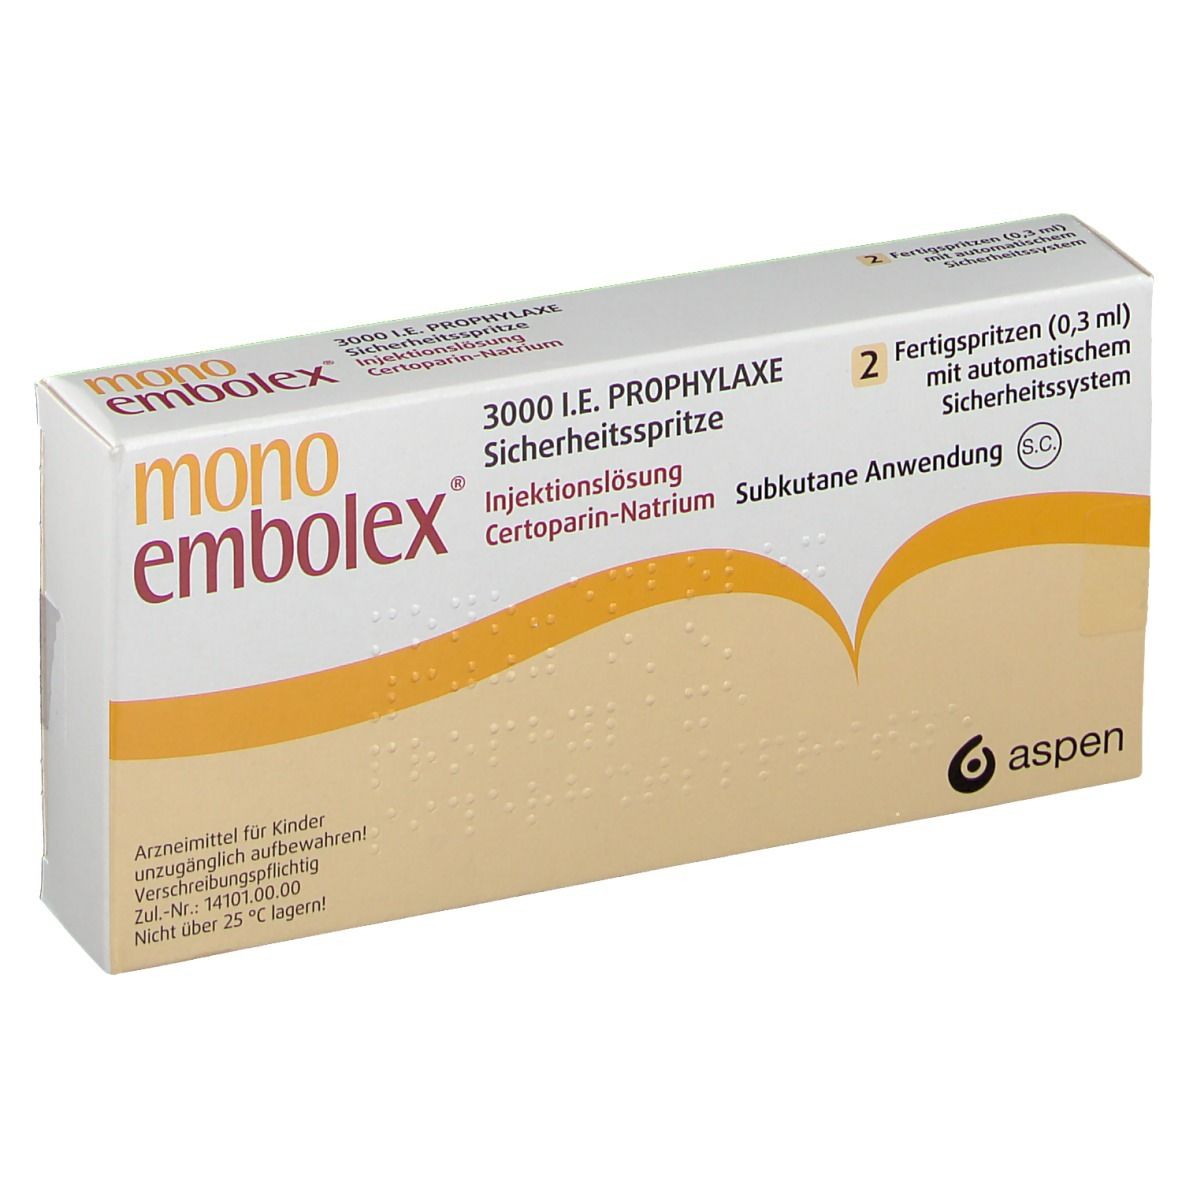 mono embolex® 3000 I.E. PROPHYLAXE